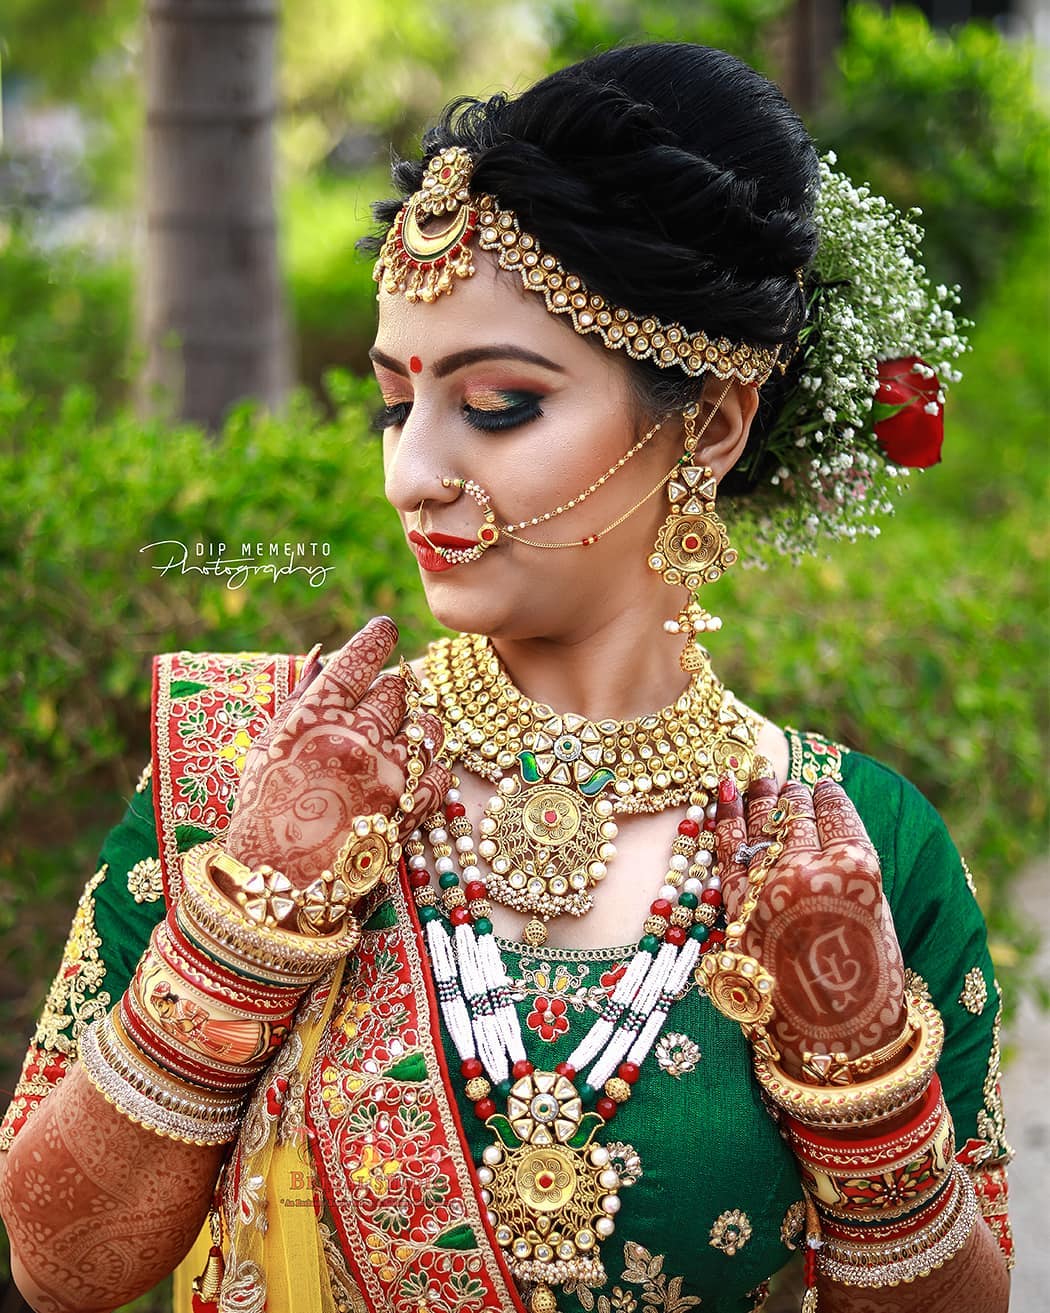 The Essence.
.
Bride shoot.. .
.
MUA : @dishabeautysaloonacademynikol

Shoot by : @dip_memento_photography
.
.
#portraits #dslrofficial #indianphotographers 
#portraitsindia #canon #colorsofindia
#photosofindia 
#fashion
#photographersofindia
#portraitsindia #fashionblogger #dipmementophotography
#makeupartist #photography #portraitvision #portraitmood #indianportraits #colorsofindia #portraitphotography #ahmedabad #indianpictures 
#portraitmood #portraits_india #bokehphotography #bongportrait #bokehphotography #yesindia